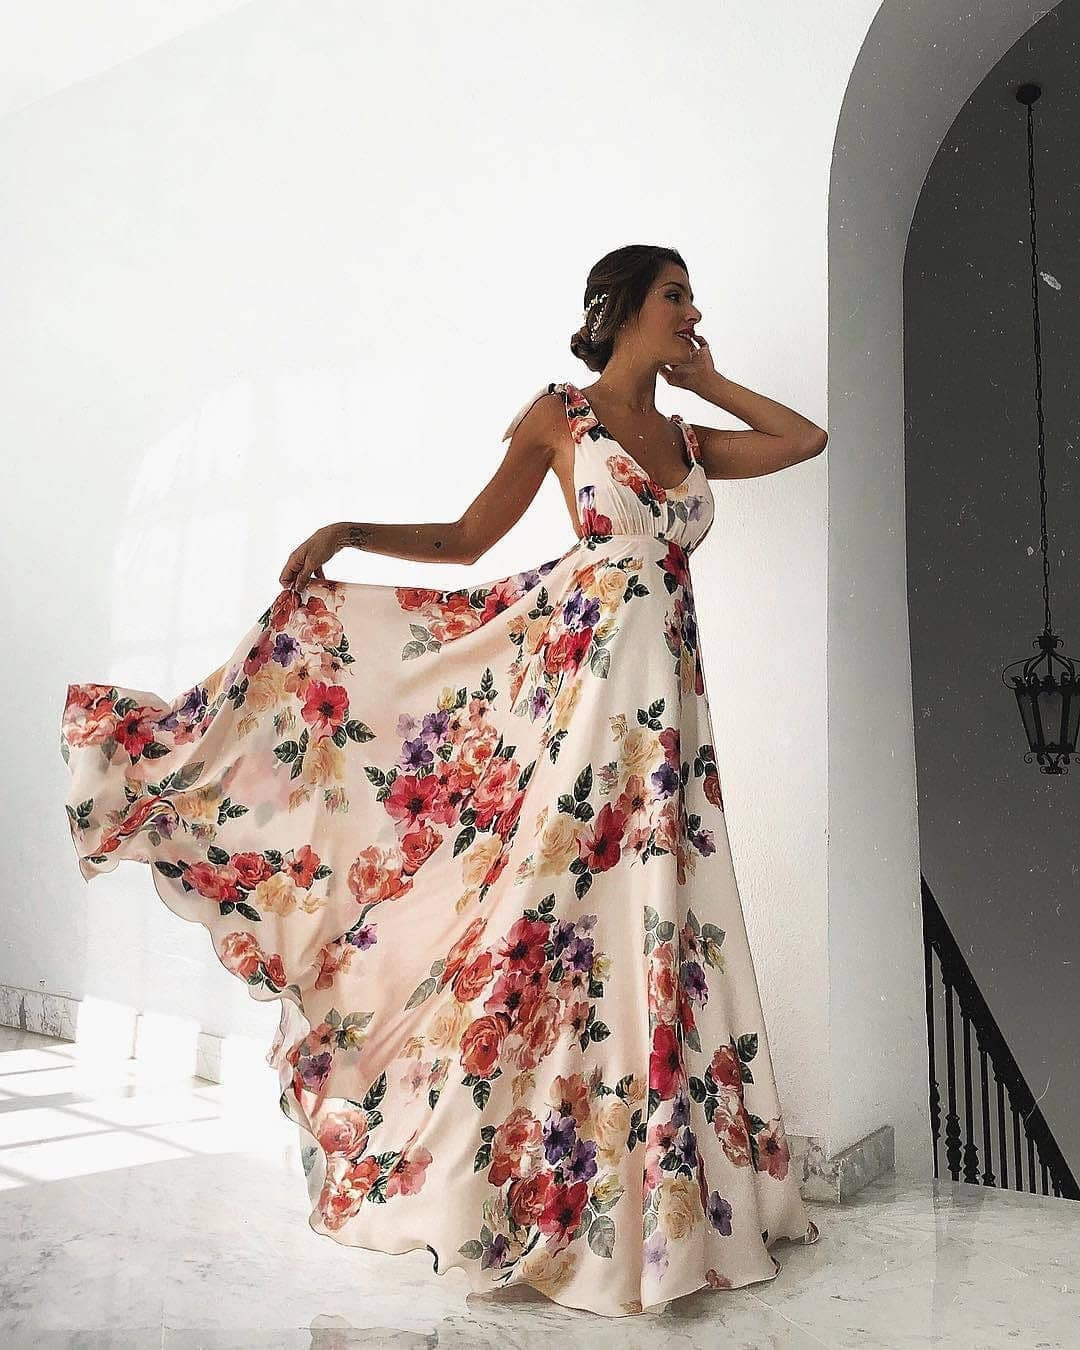 floral sleeveless maxi dress